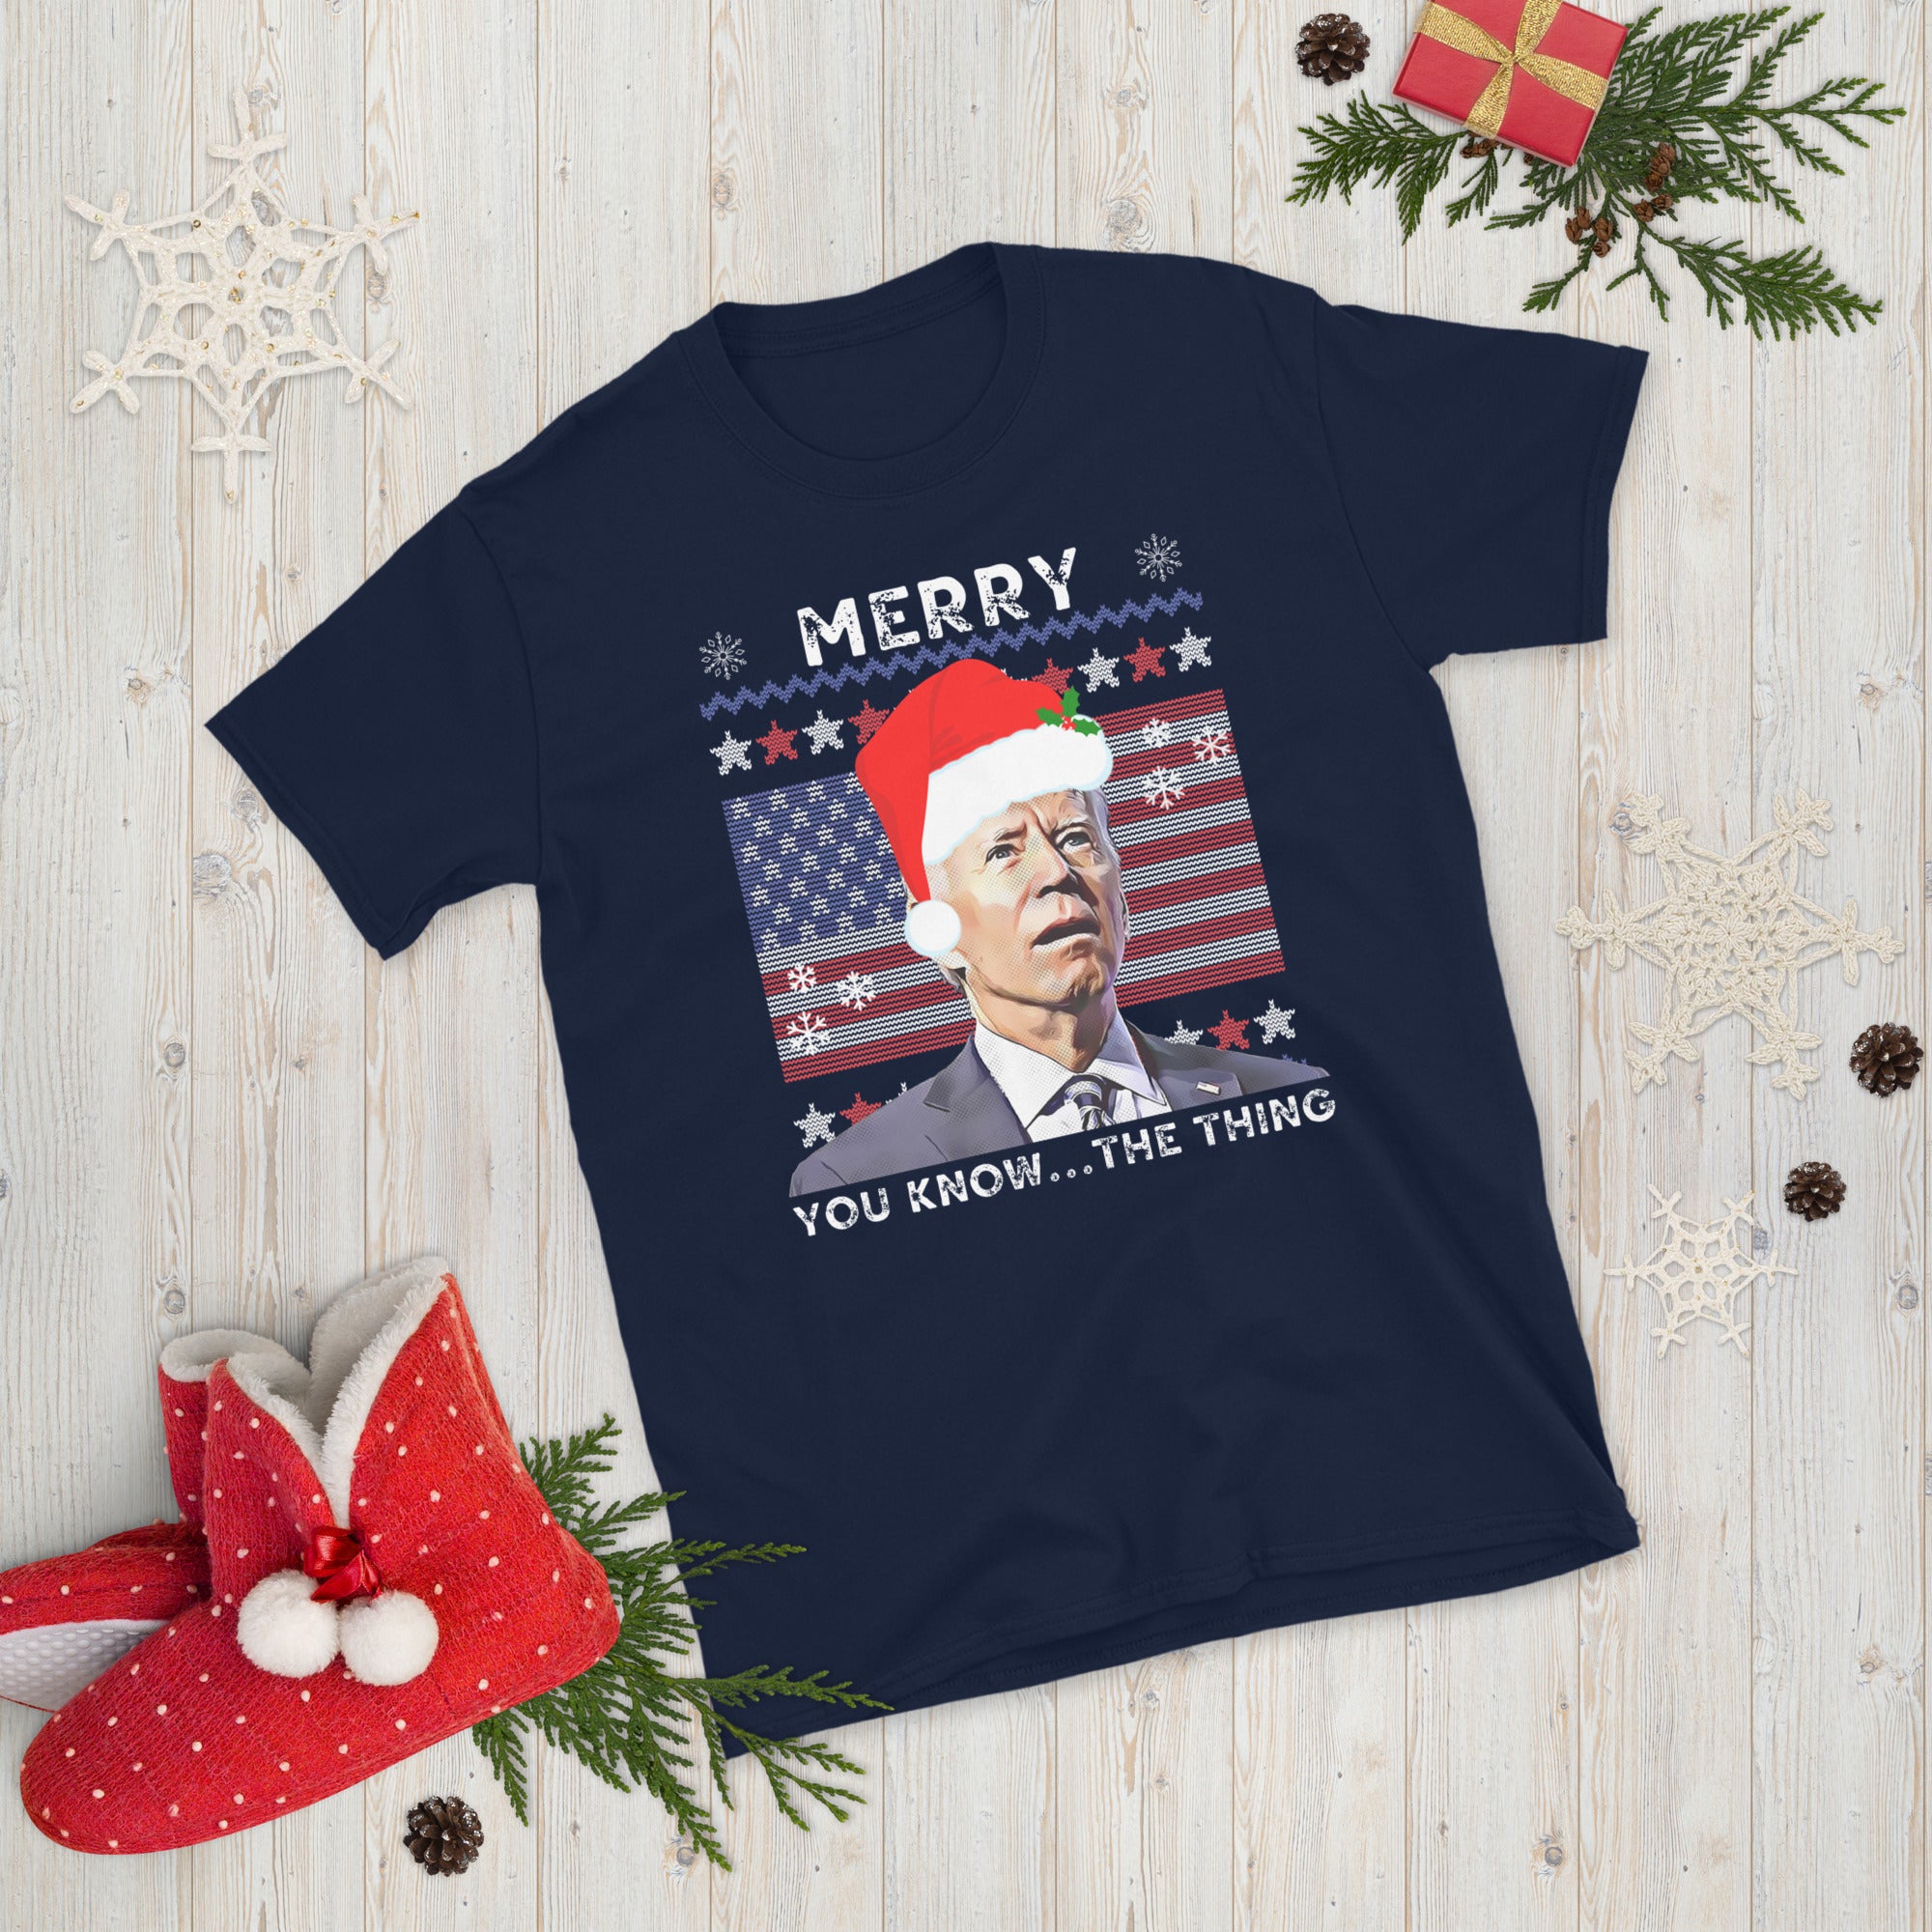 Merry You Know The Thing, Christmas Biden Shirt, Funny Confused Joe Biden Xmas Tshirt, Santa Joe Biden T Shirt, Republican Gifts, FJB Shirt - Madeinsea©